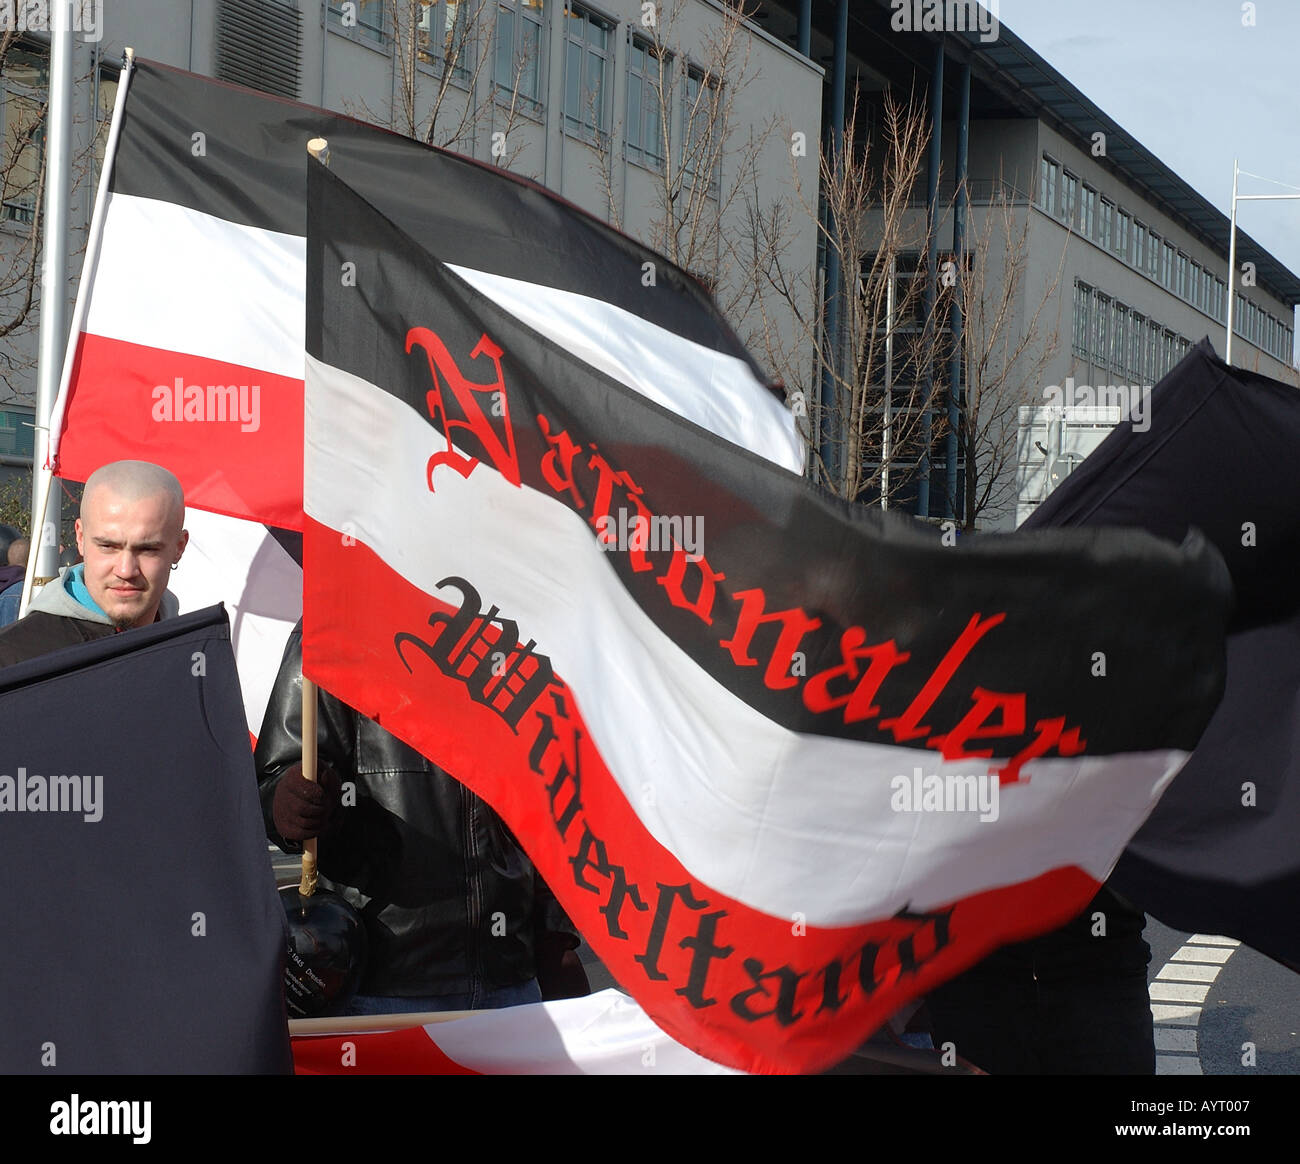 Far-right demonstrator flying flags at demonstration in Dresden Stock Photo